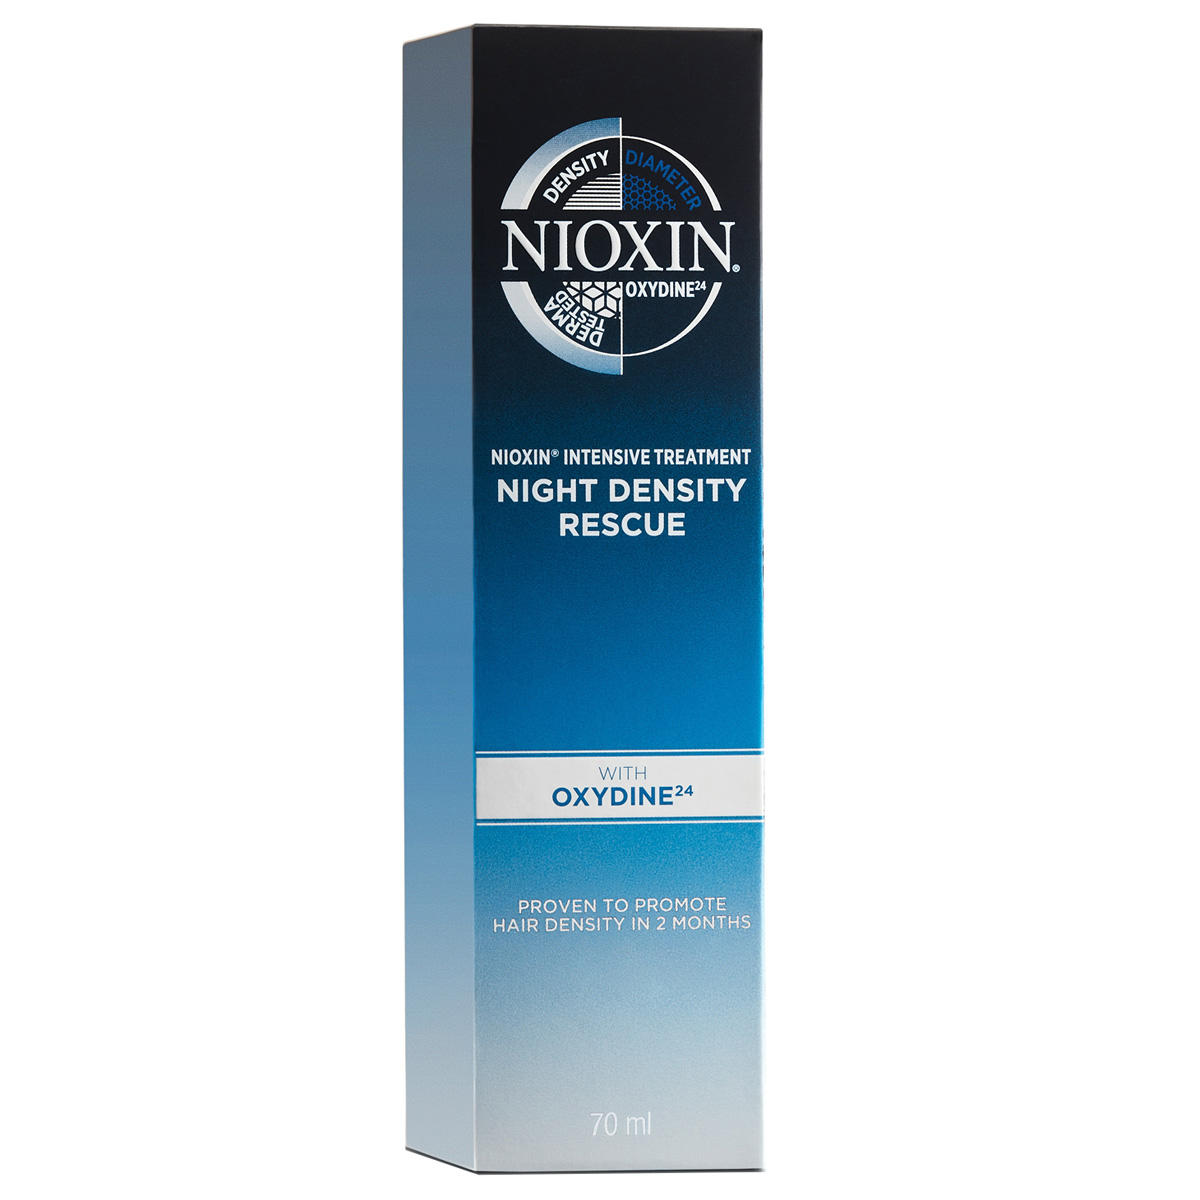 NIOXIN Intensive Treatments Night Densitiy Rescue 70 ml - 2